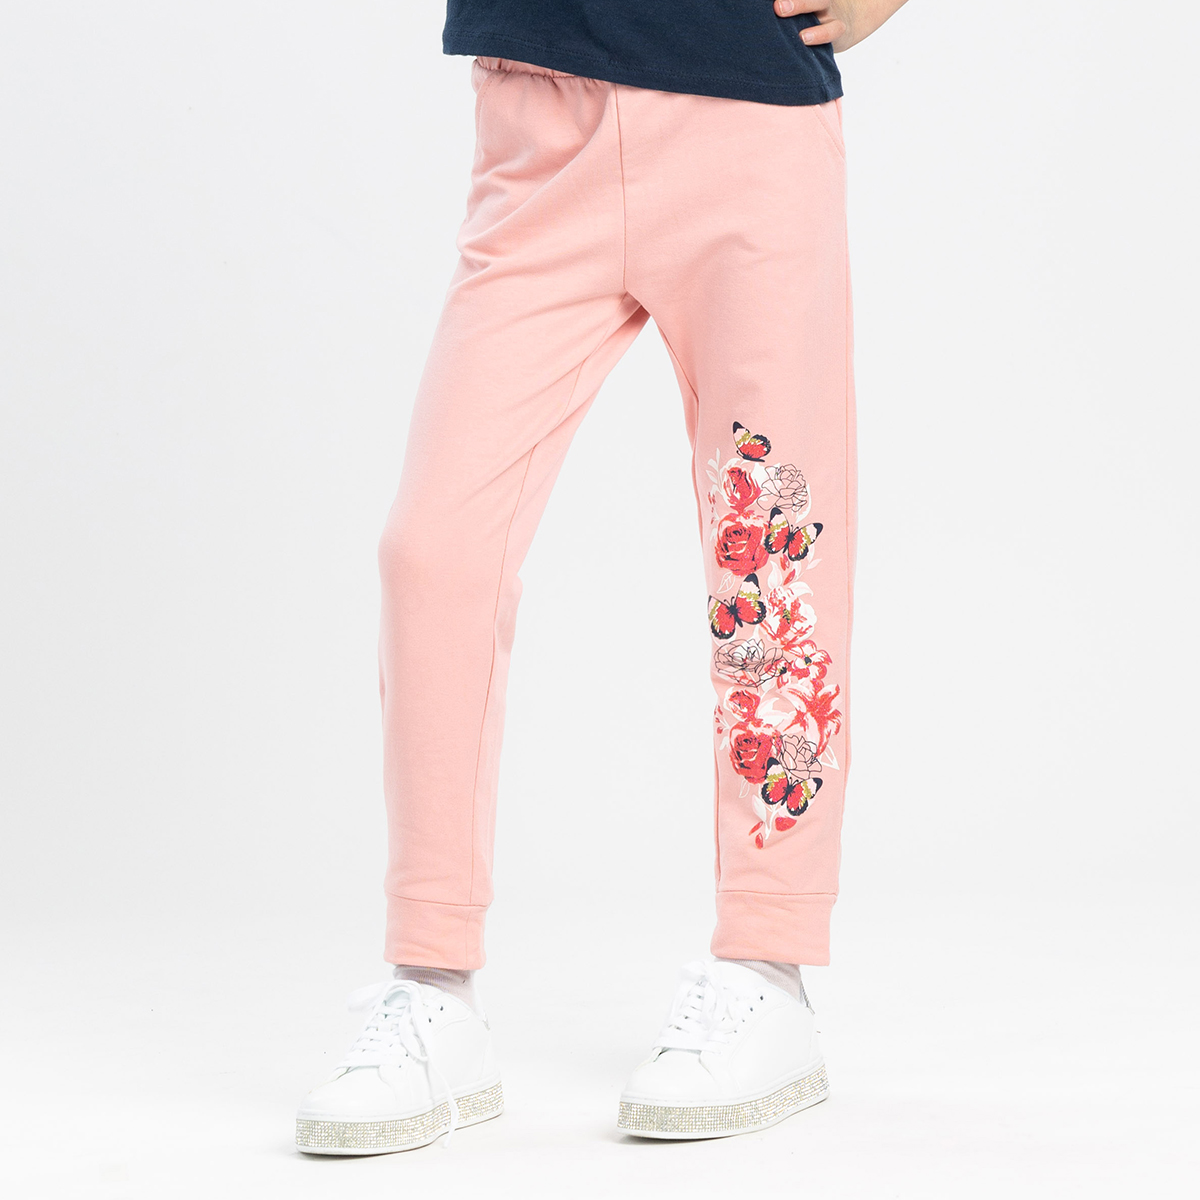 Dekliške hlače, svetlo roza